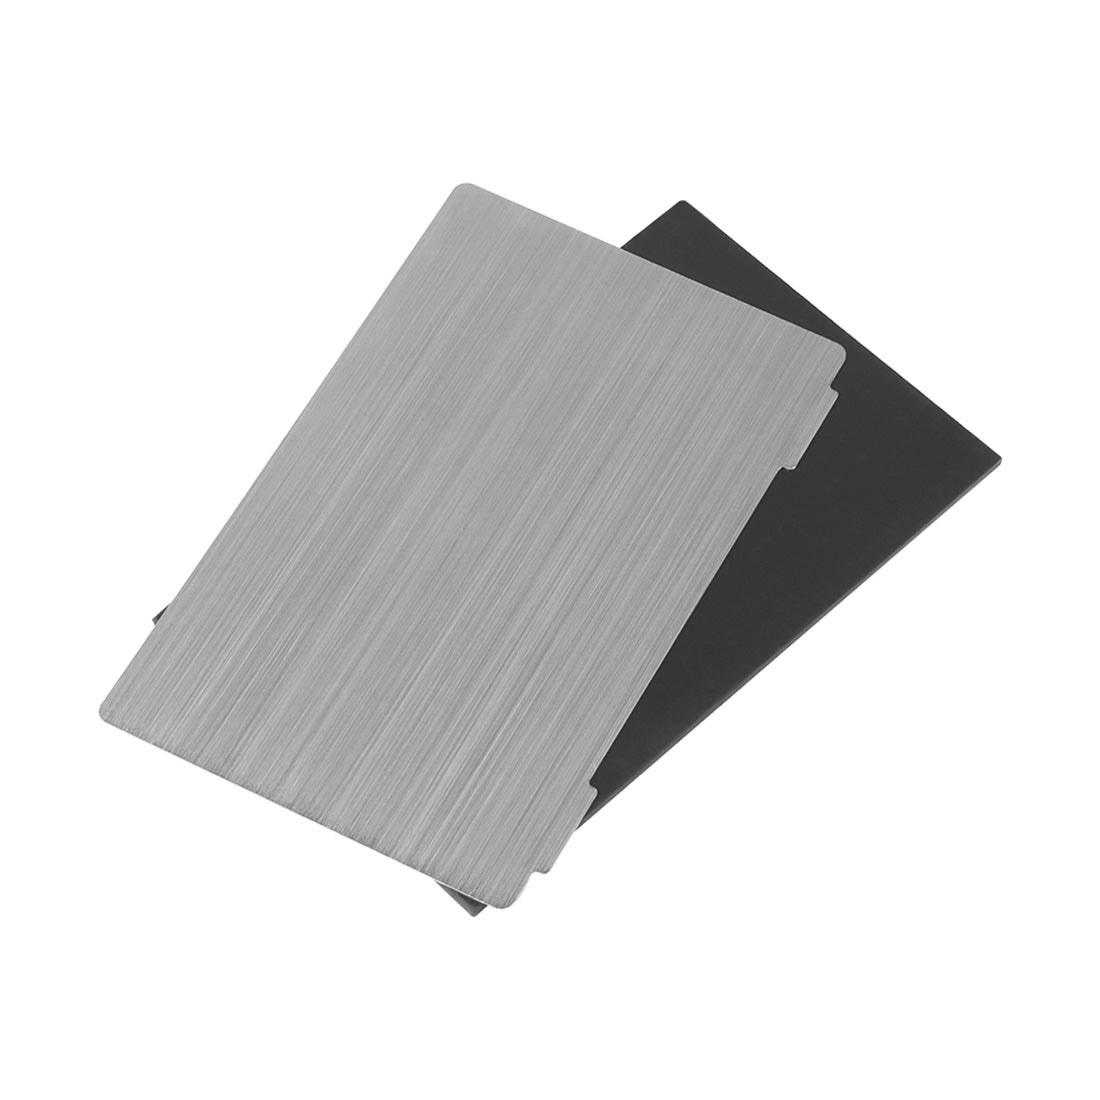 Creality SLA Flexible Steel Plate Kit for LD-002H 138 x 85mm